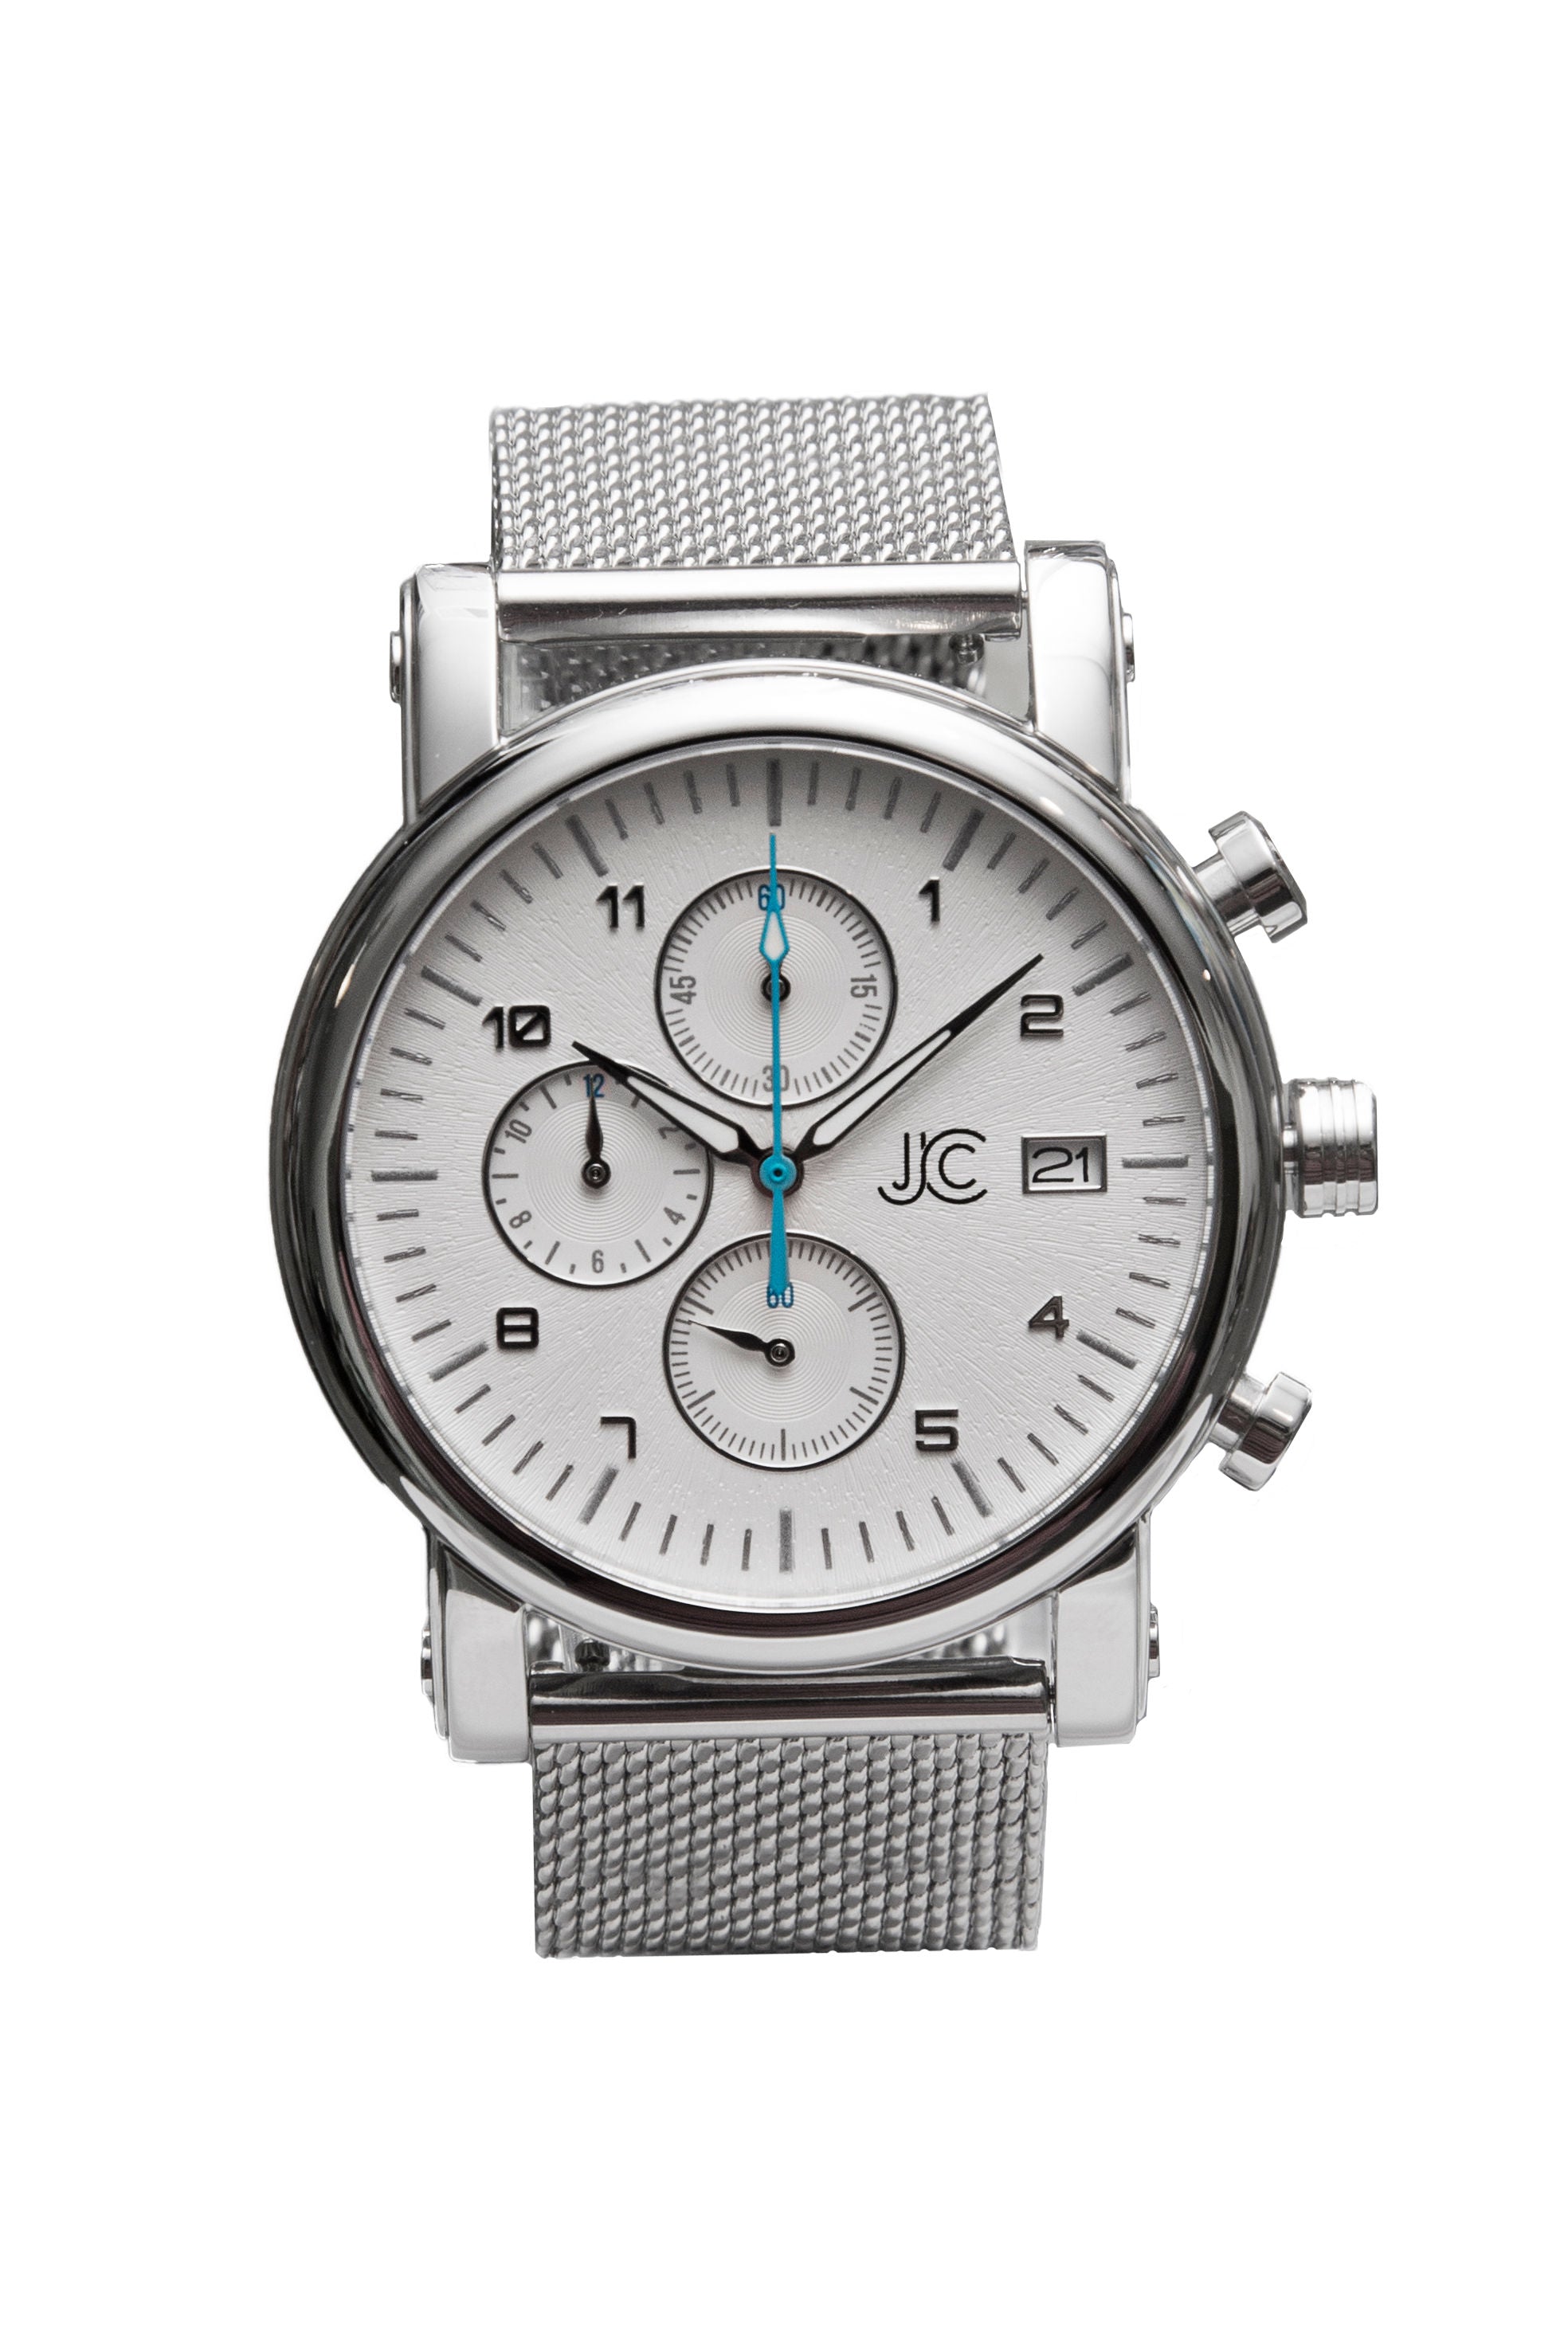 J.Ciro S3 White Dial Chronograph Watch